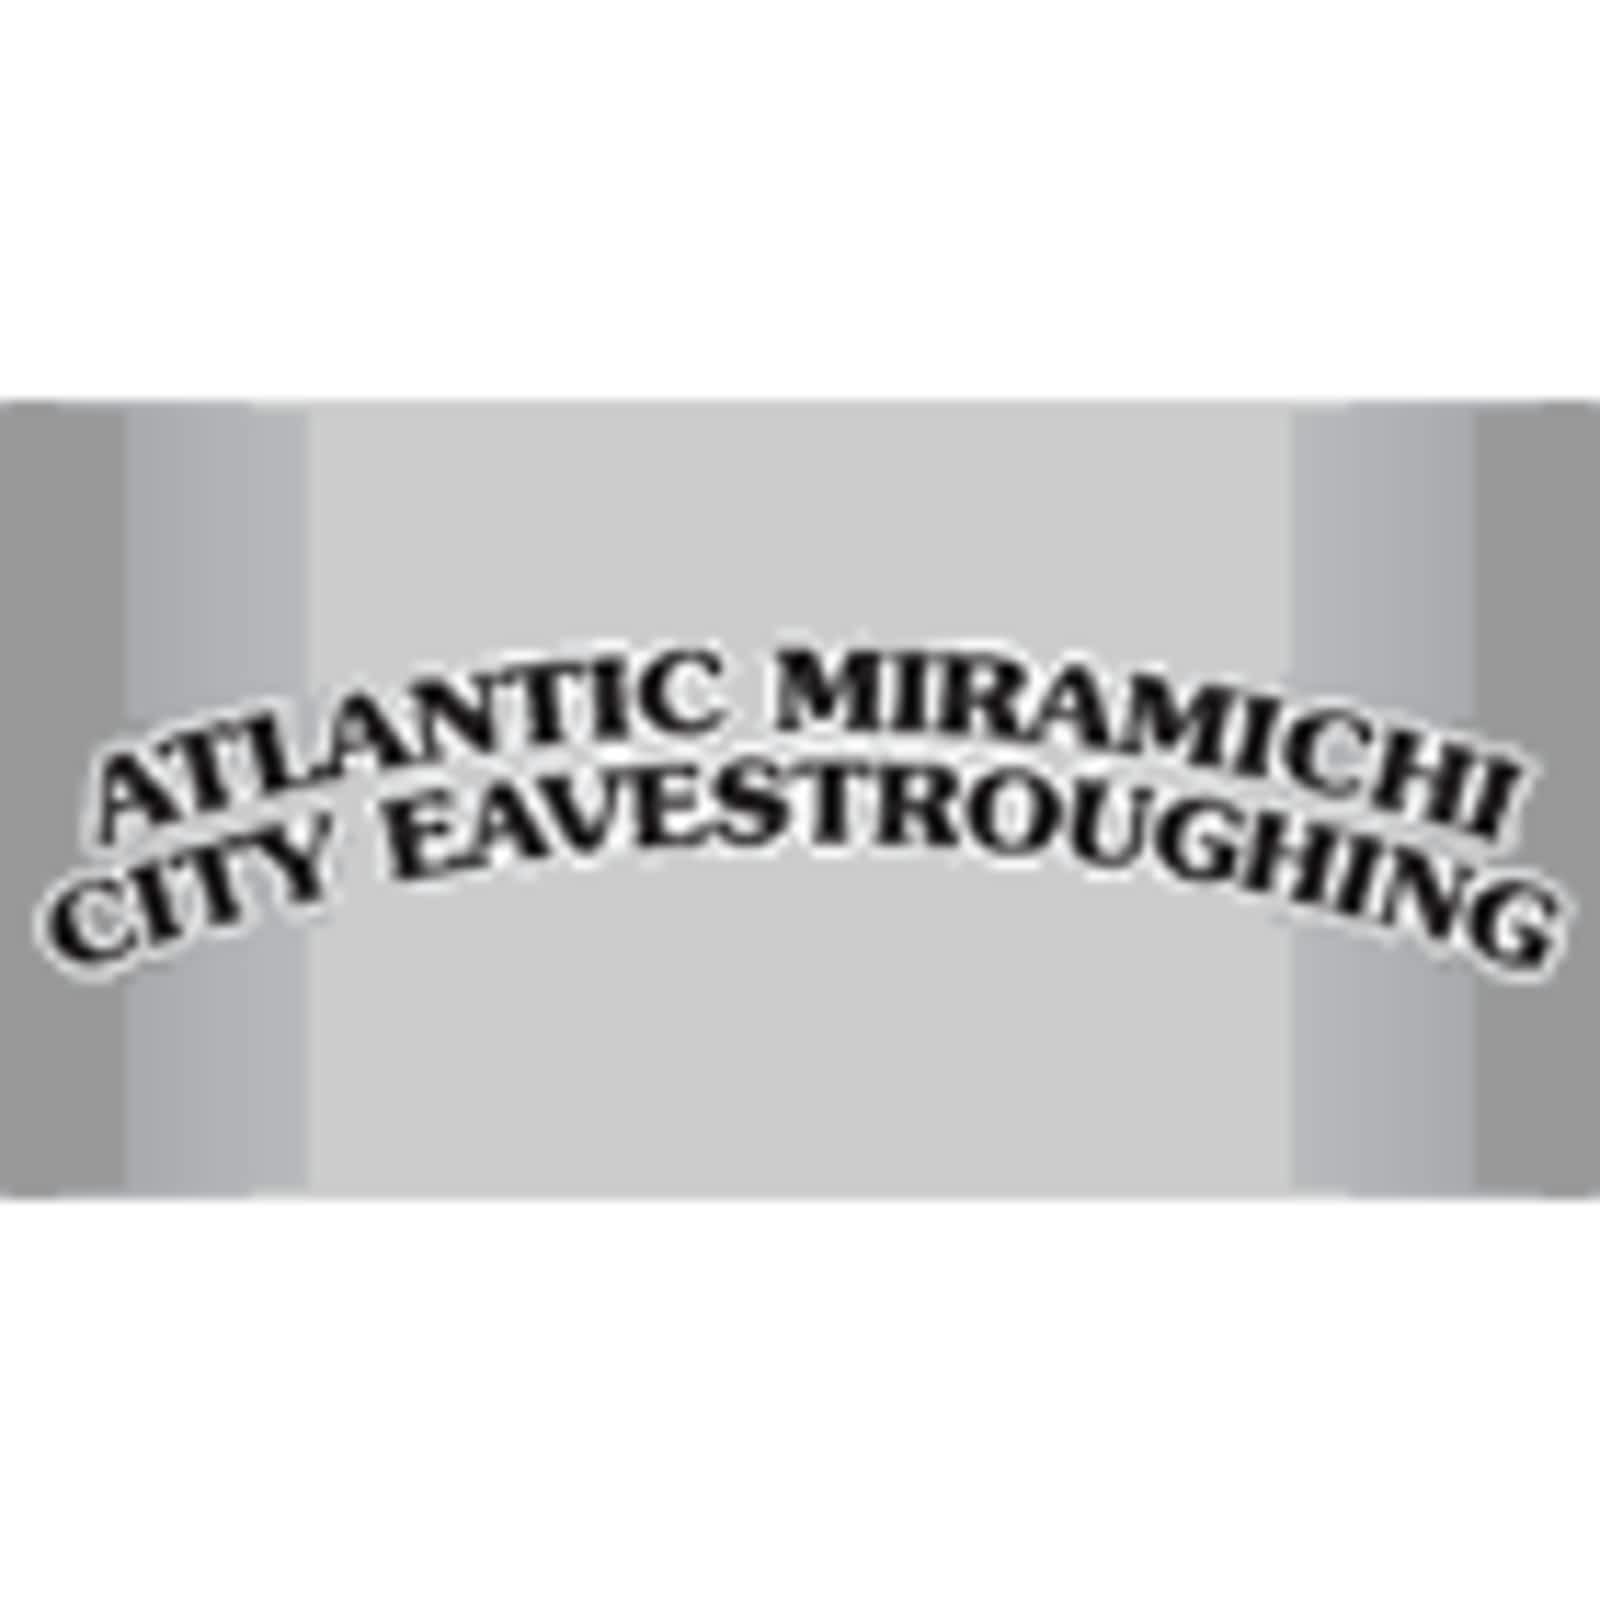 Atlantic Miramichi City Eavestroughing 289 Brown Rd, Miramichi New Brunswick E1V 3L7